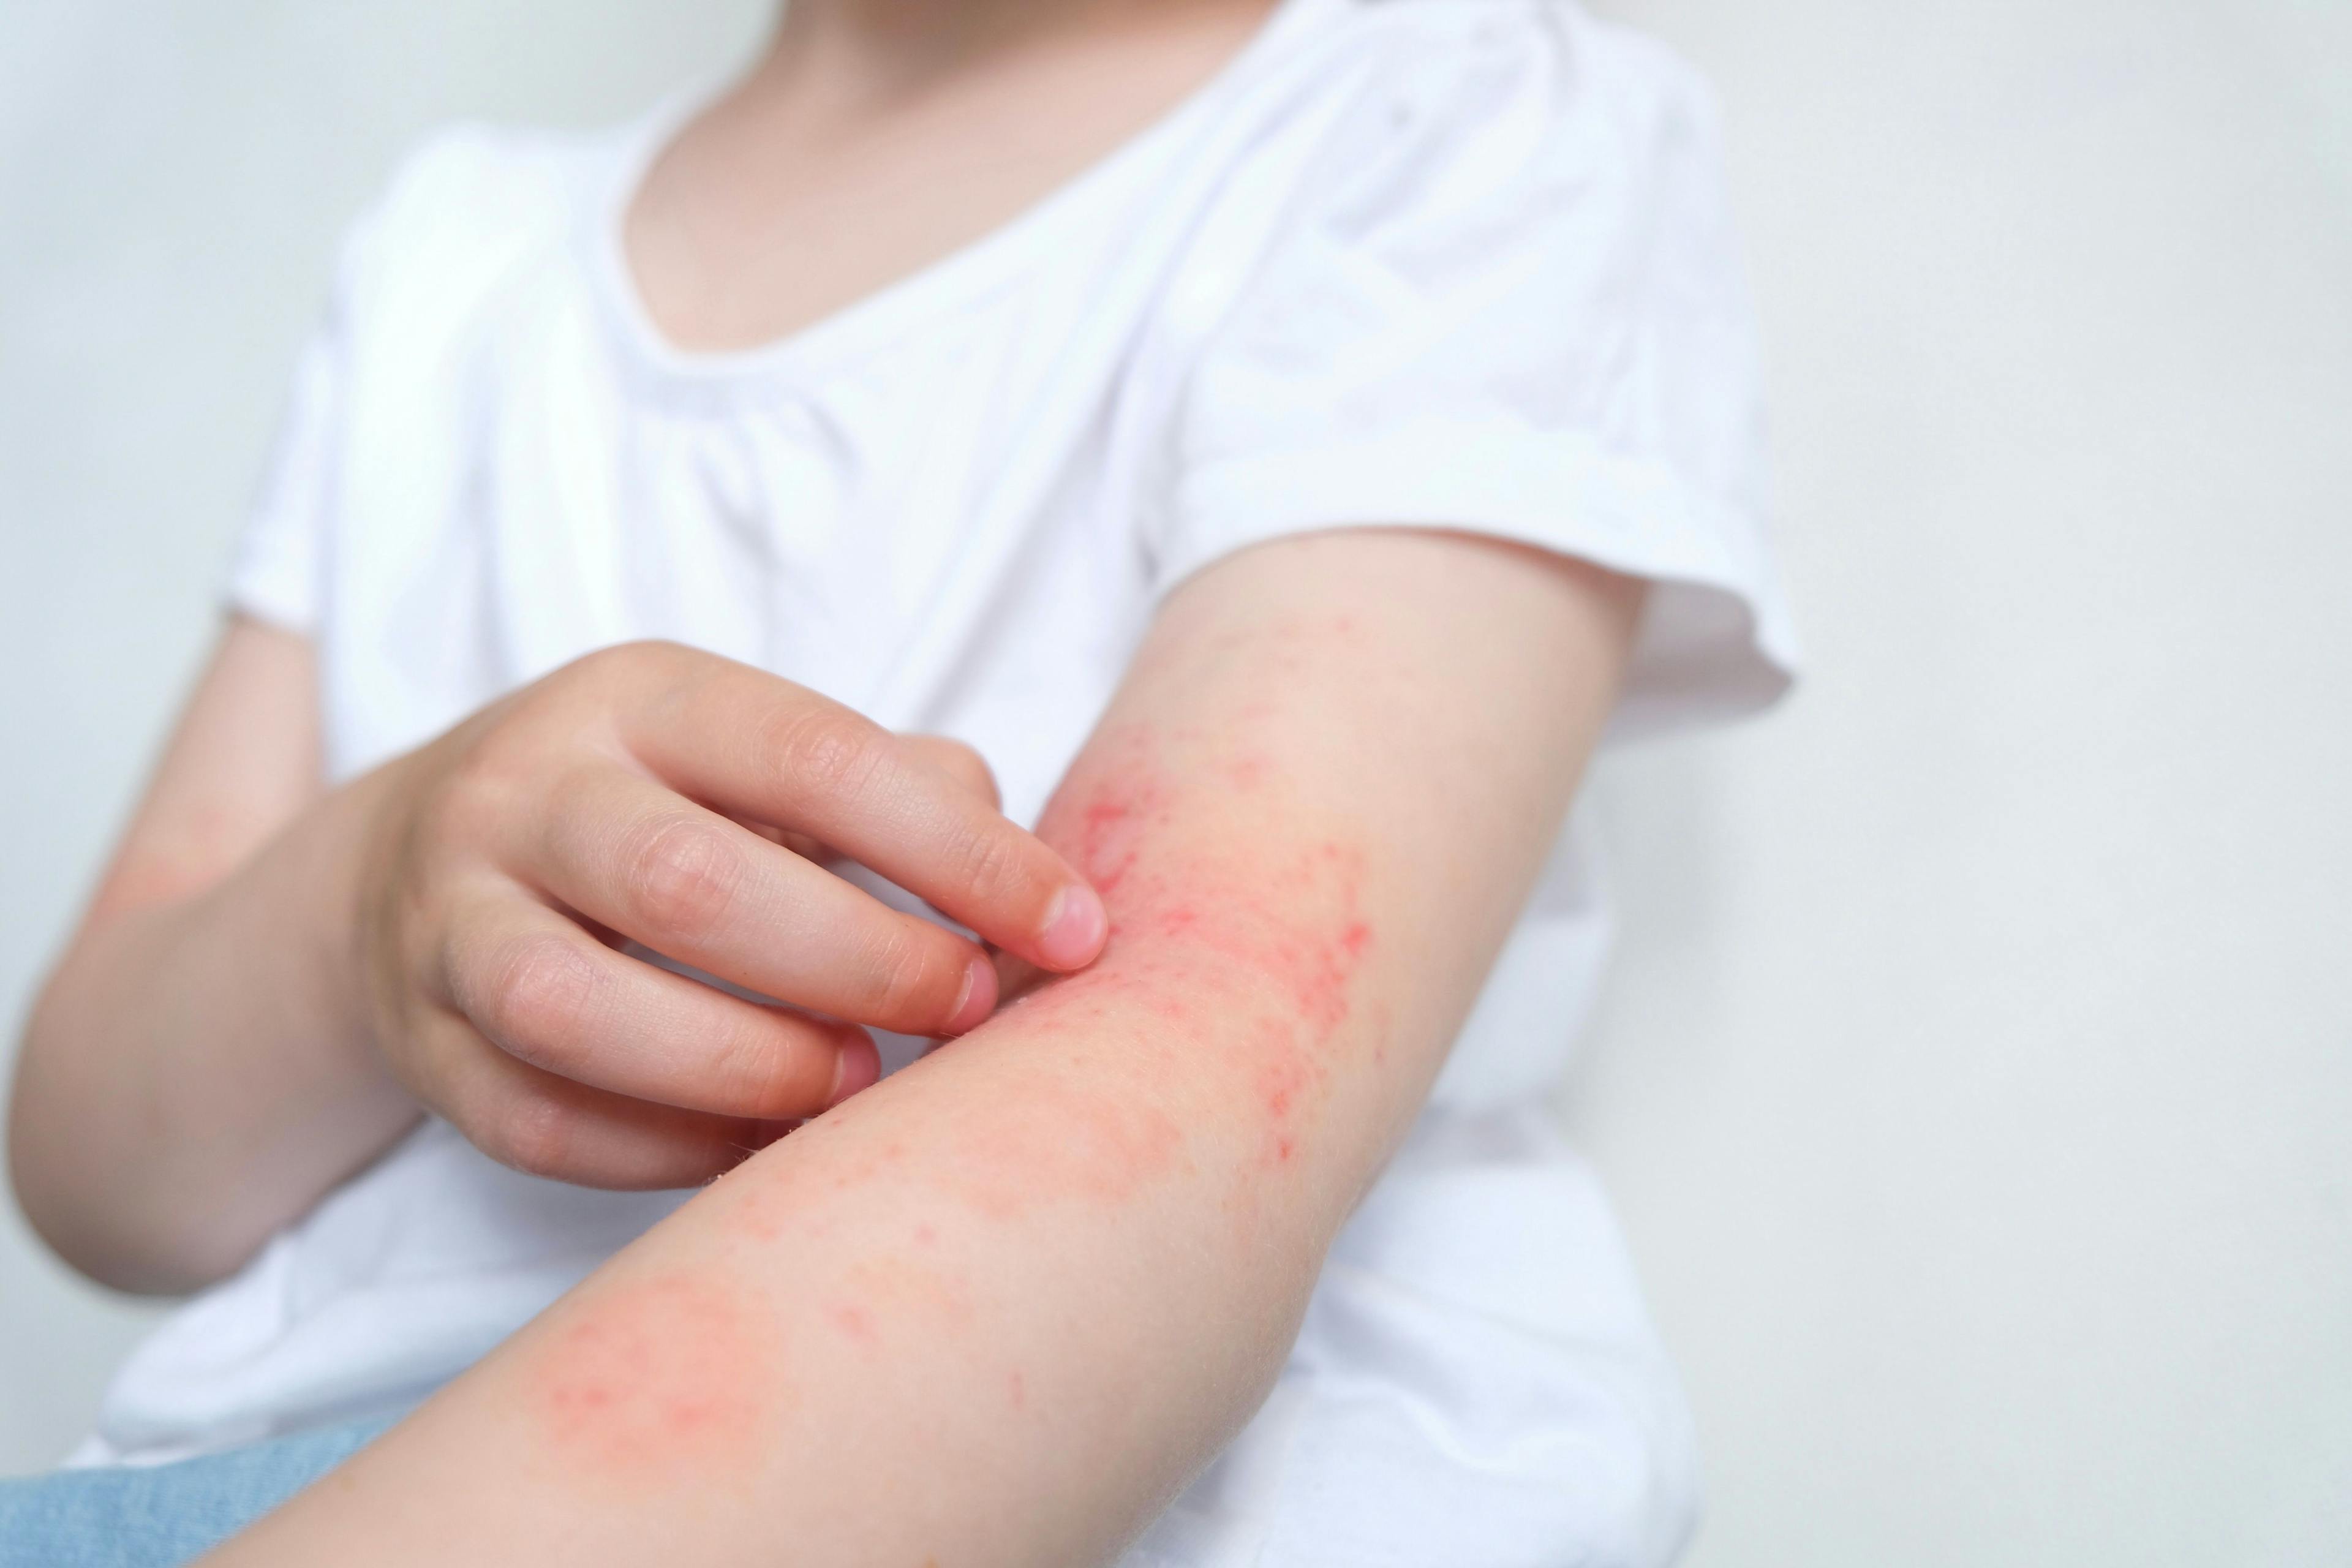 Child with atopic dermatitis | Image credit: Марина Терехова - stock.adobe.com